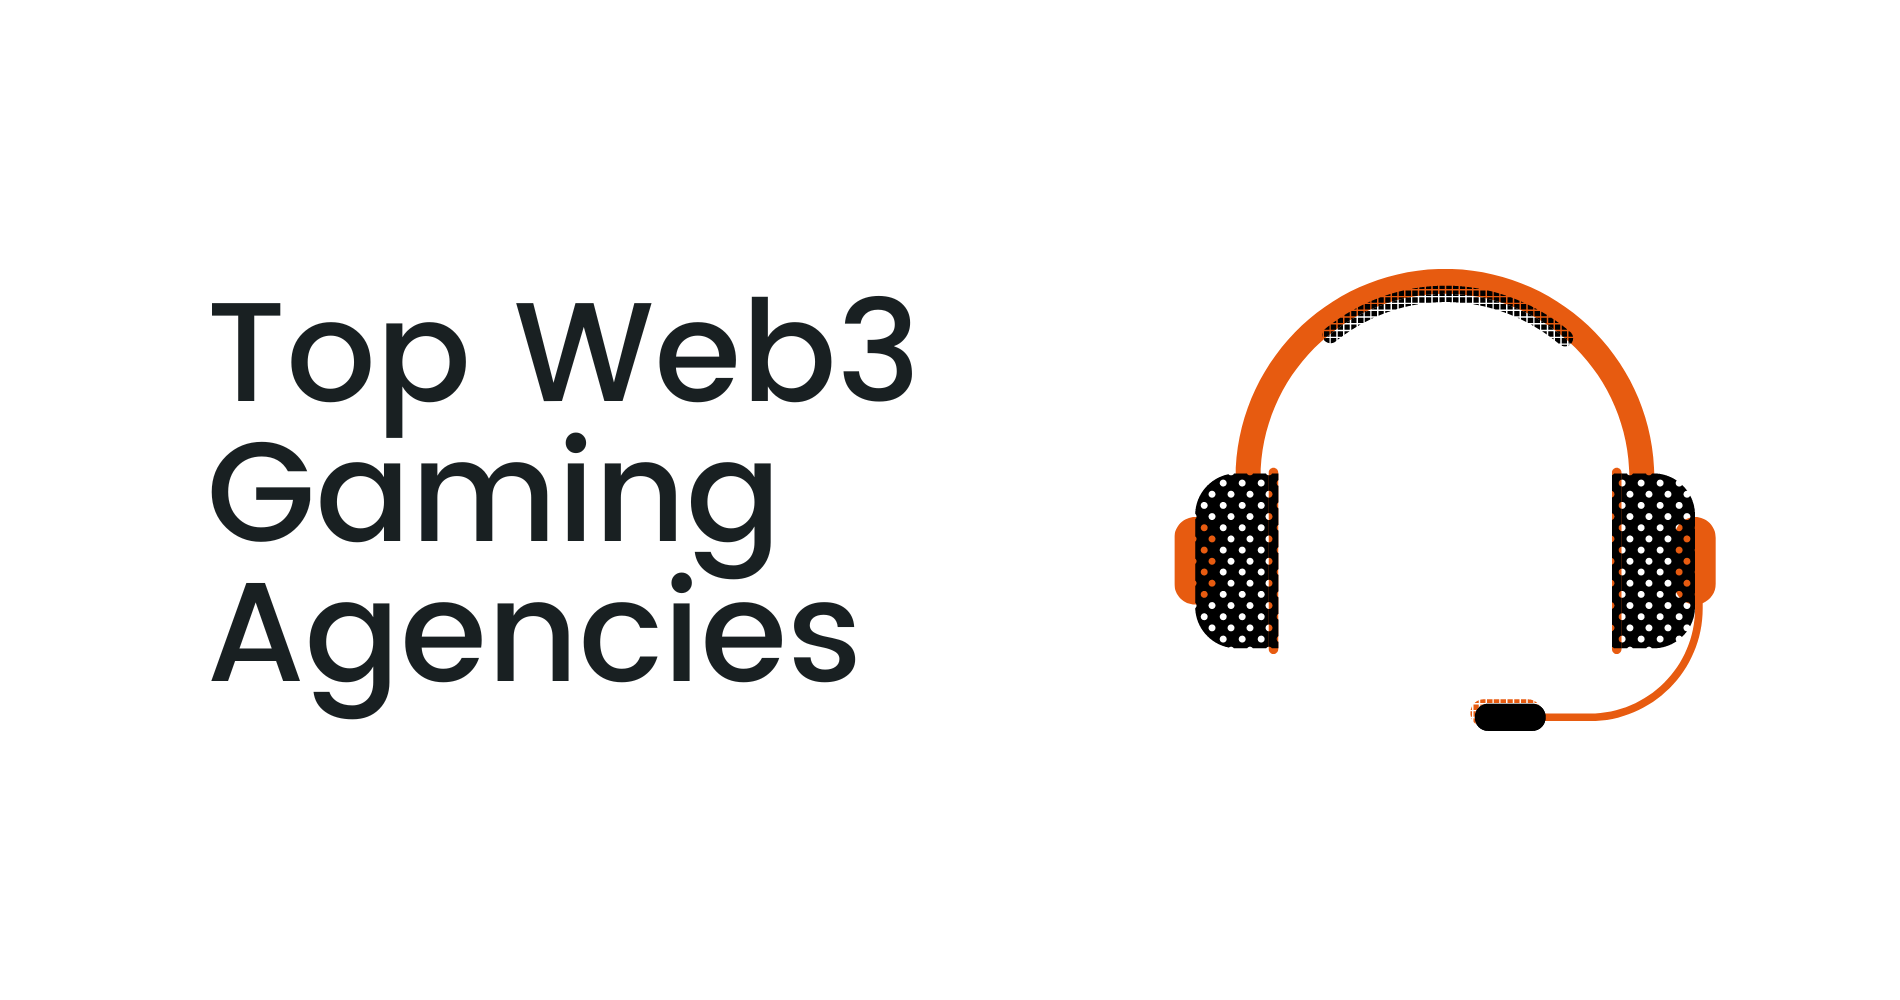 Top Web3 Gaming Agencies